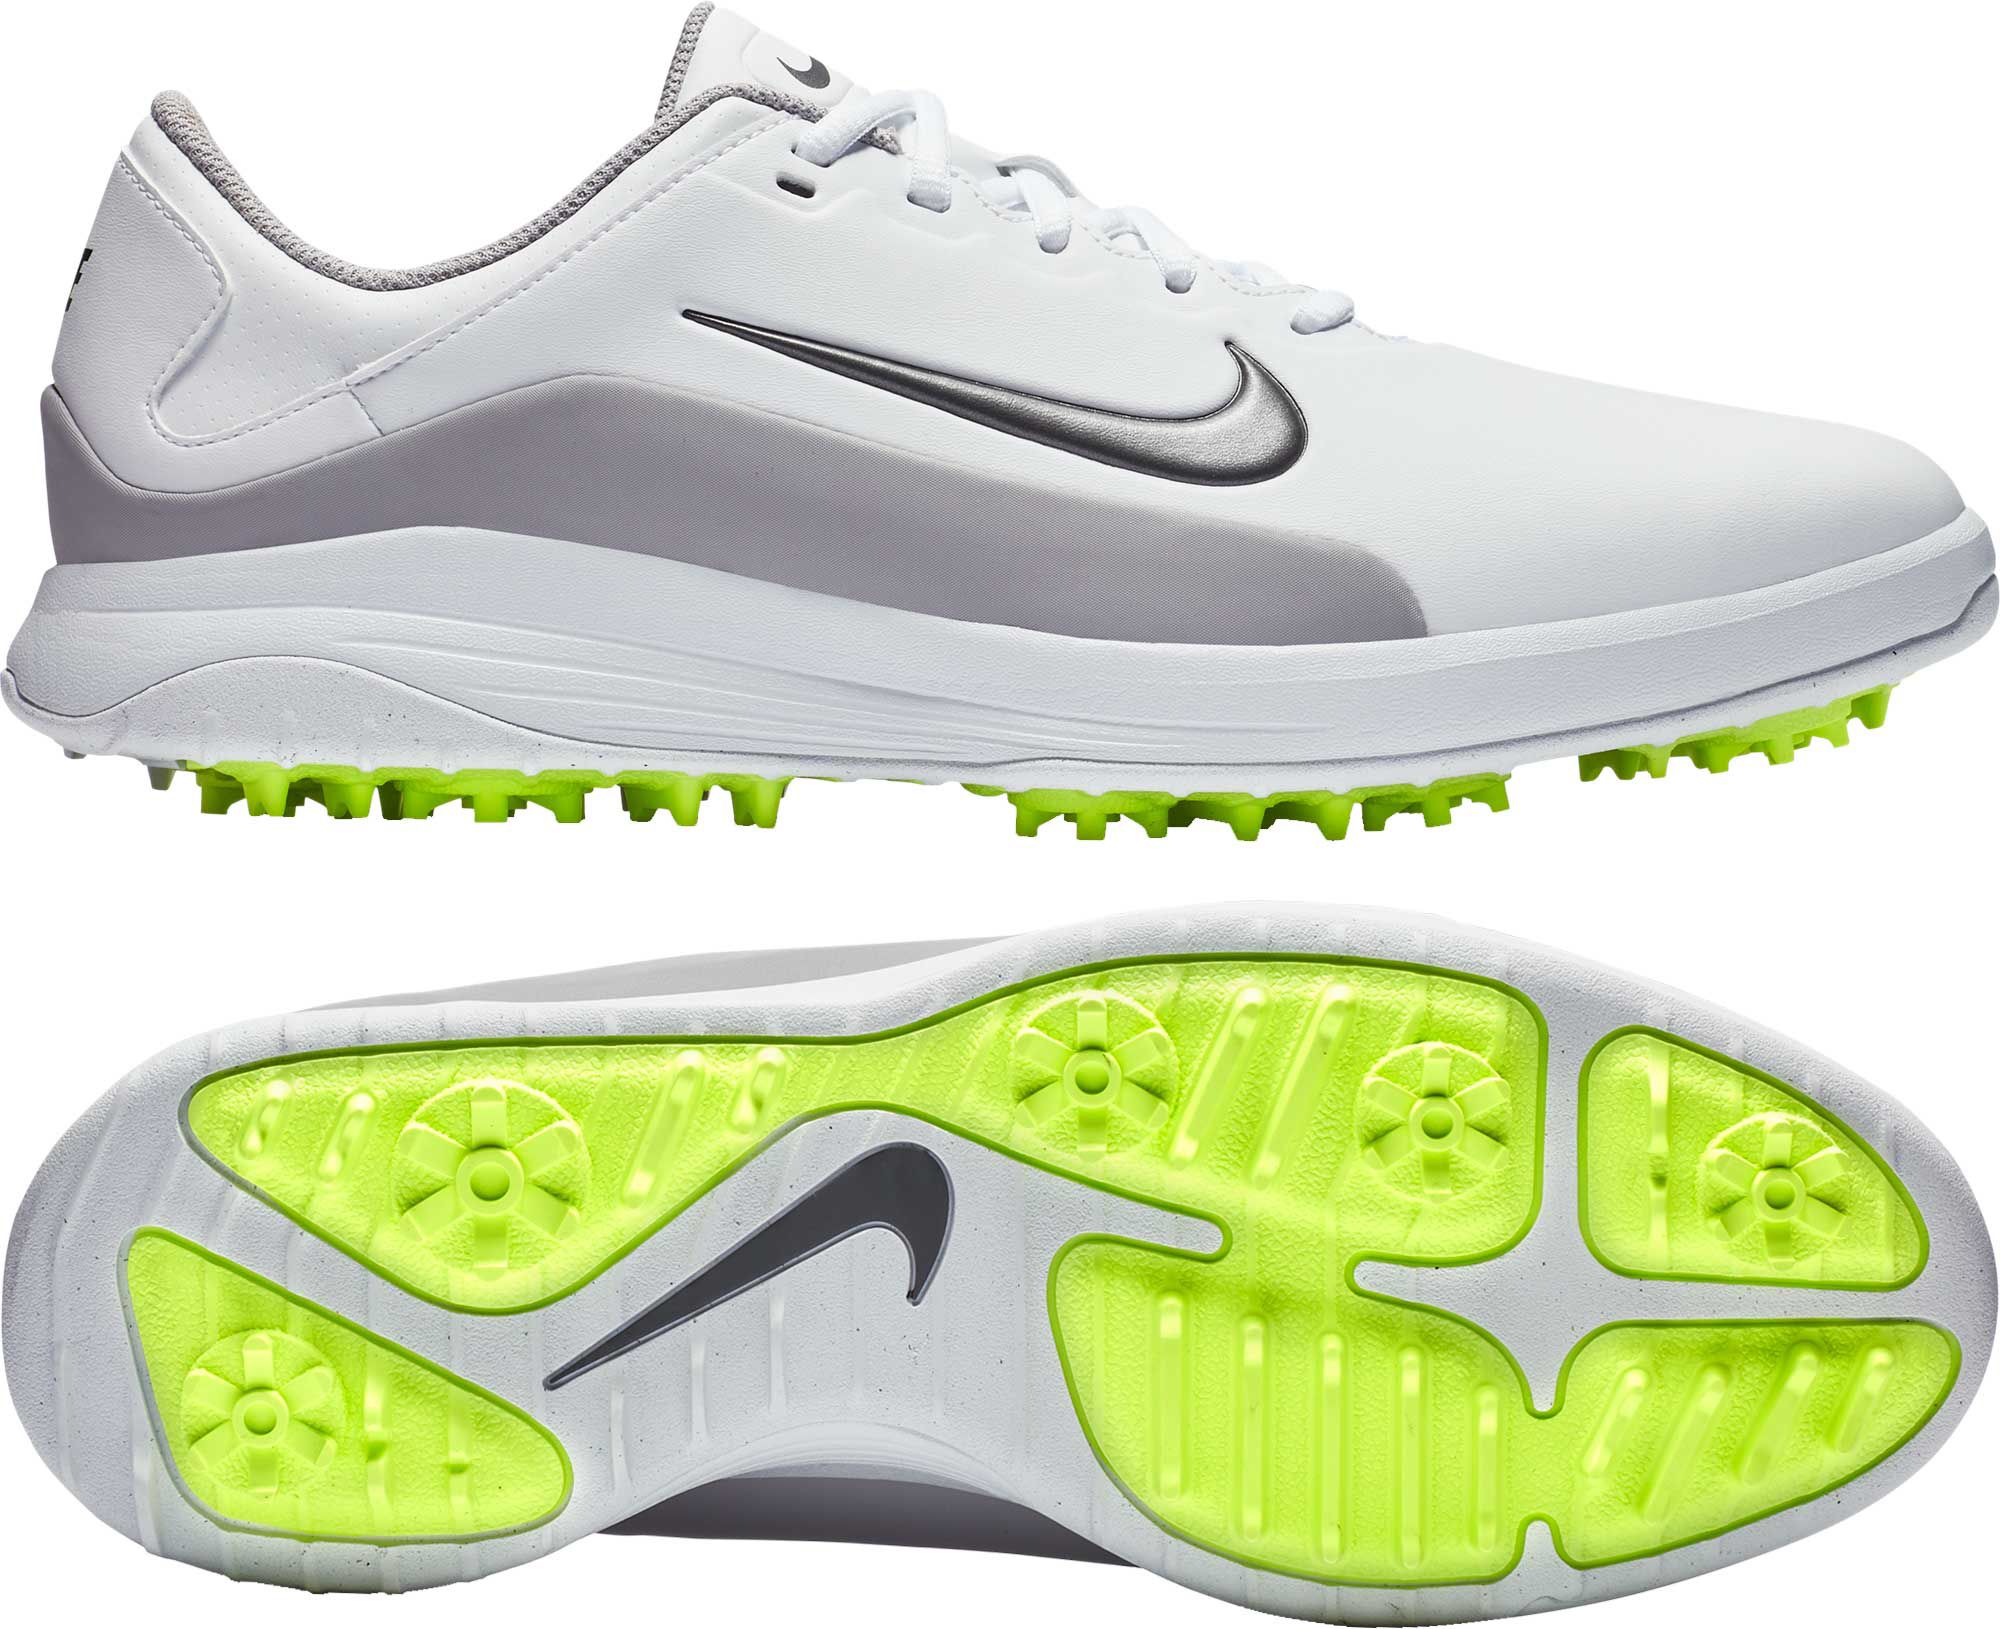 nike men's vapor golf shoes review